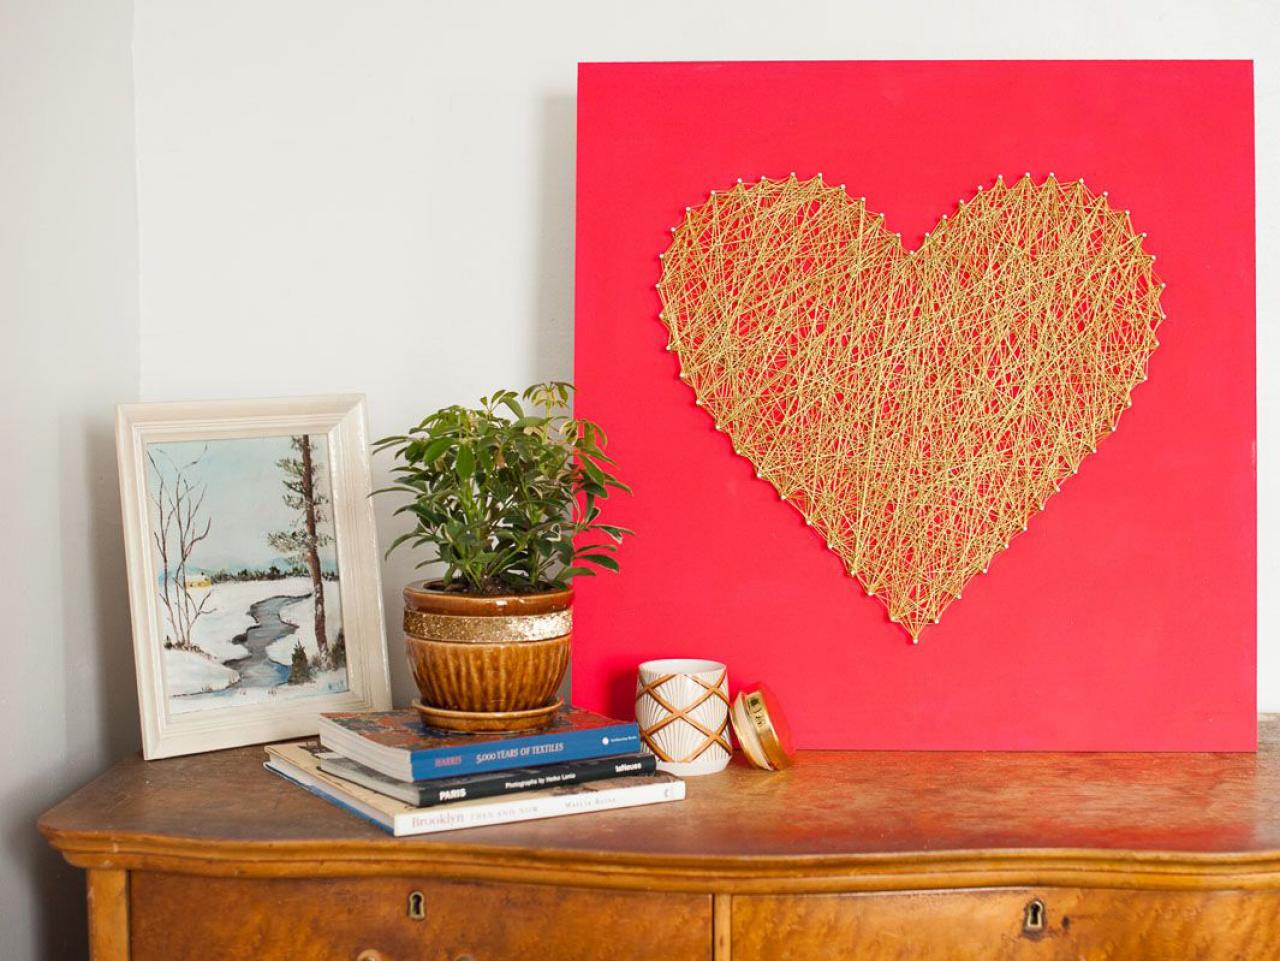 14 Diy Valentine S Day Decorations You Ll Love Hgtv S Decorating Design Blog Hgtv